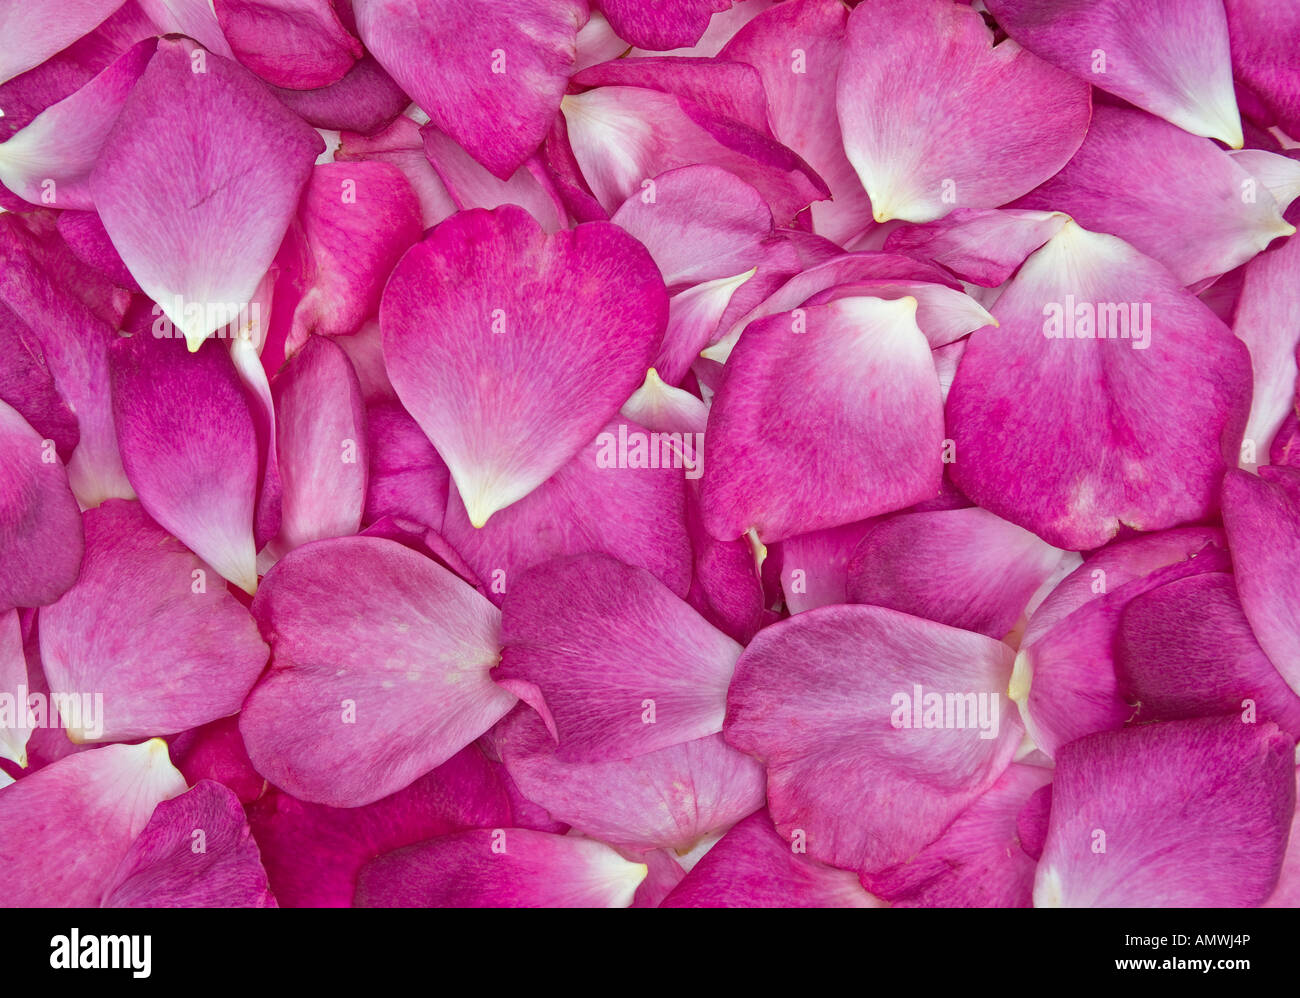 background image of beautiful pink rose petals Stock Photo